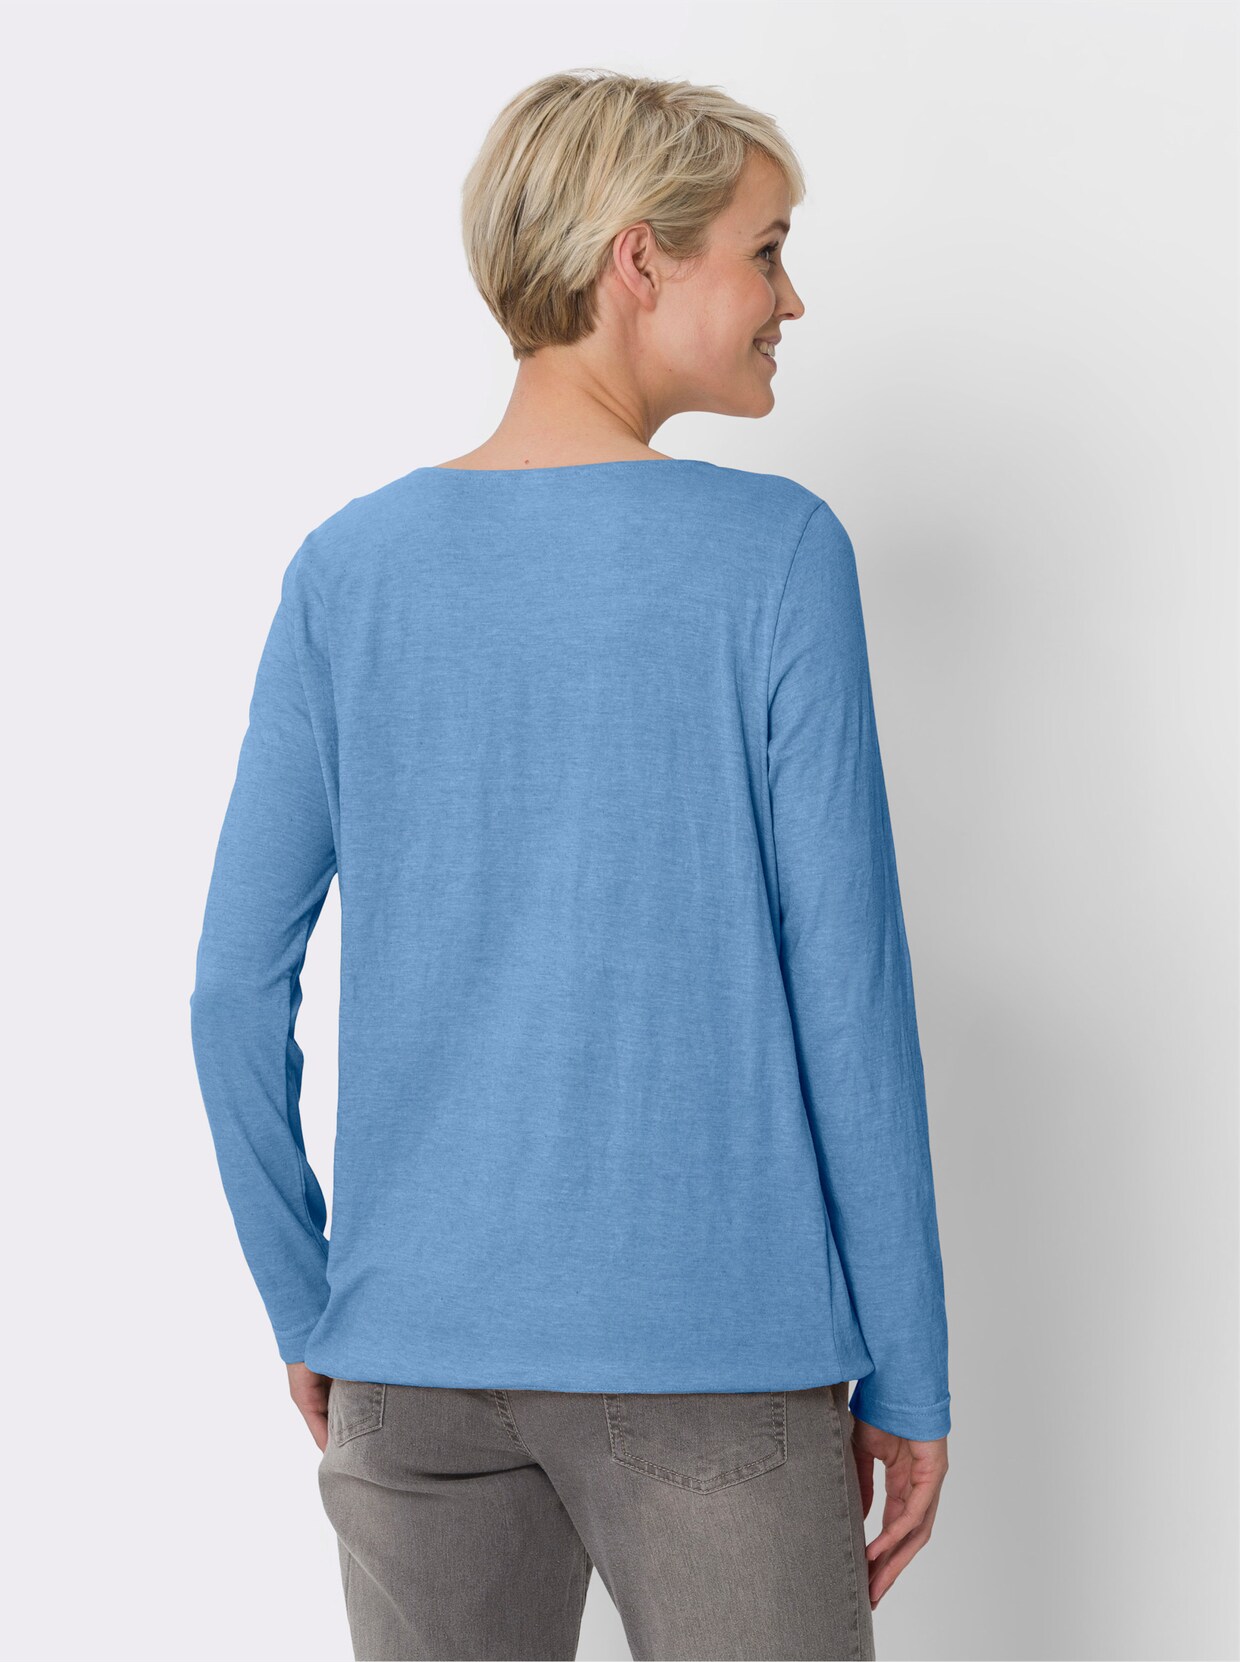 Tričko s dlouhým rukávem - modrá-melír